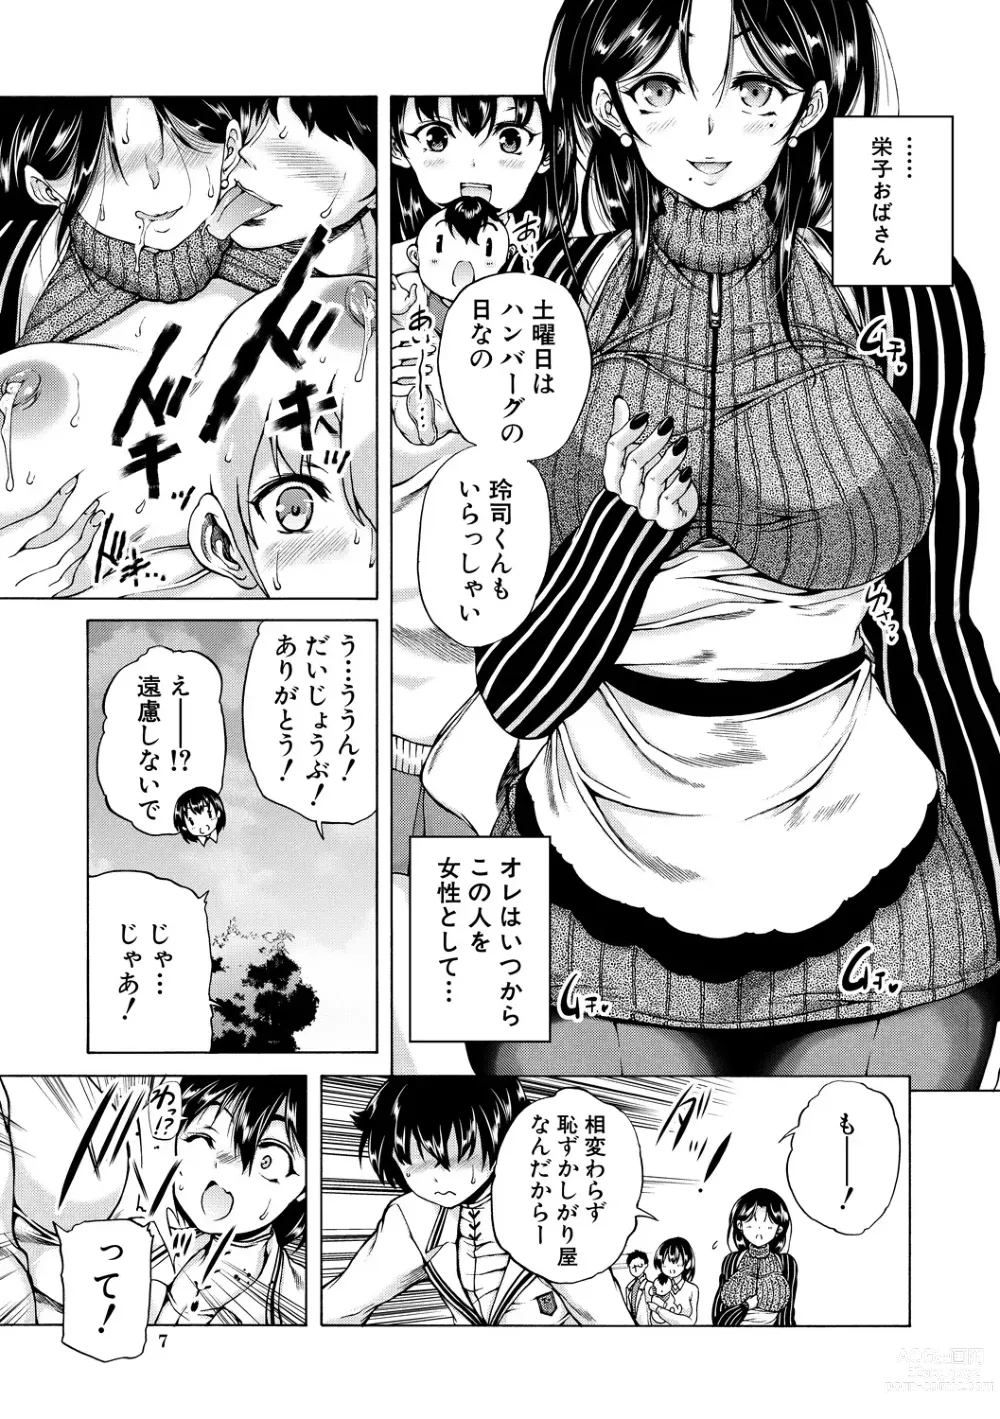 Page 7 of manga Maou Tensei Harem - Devil Reincarnation